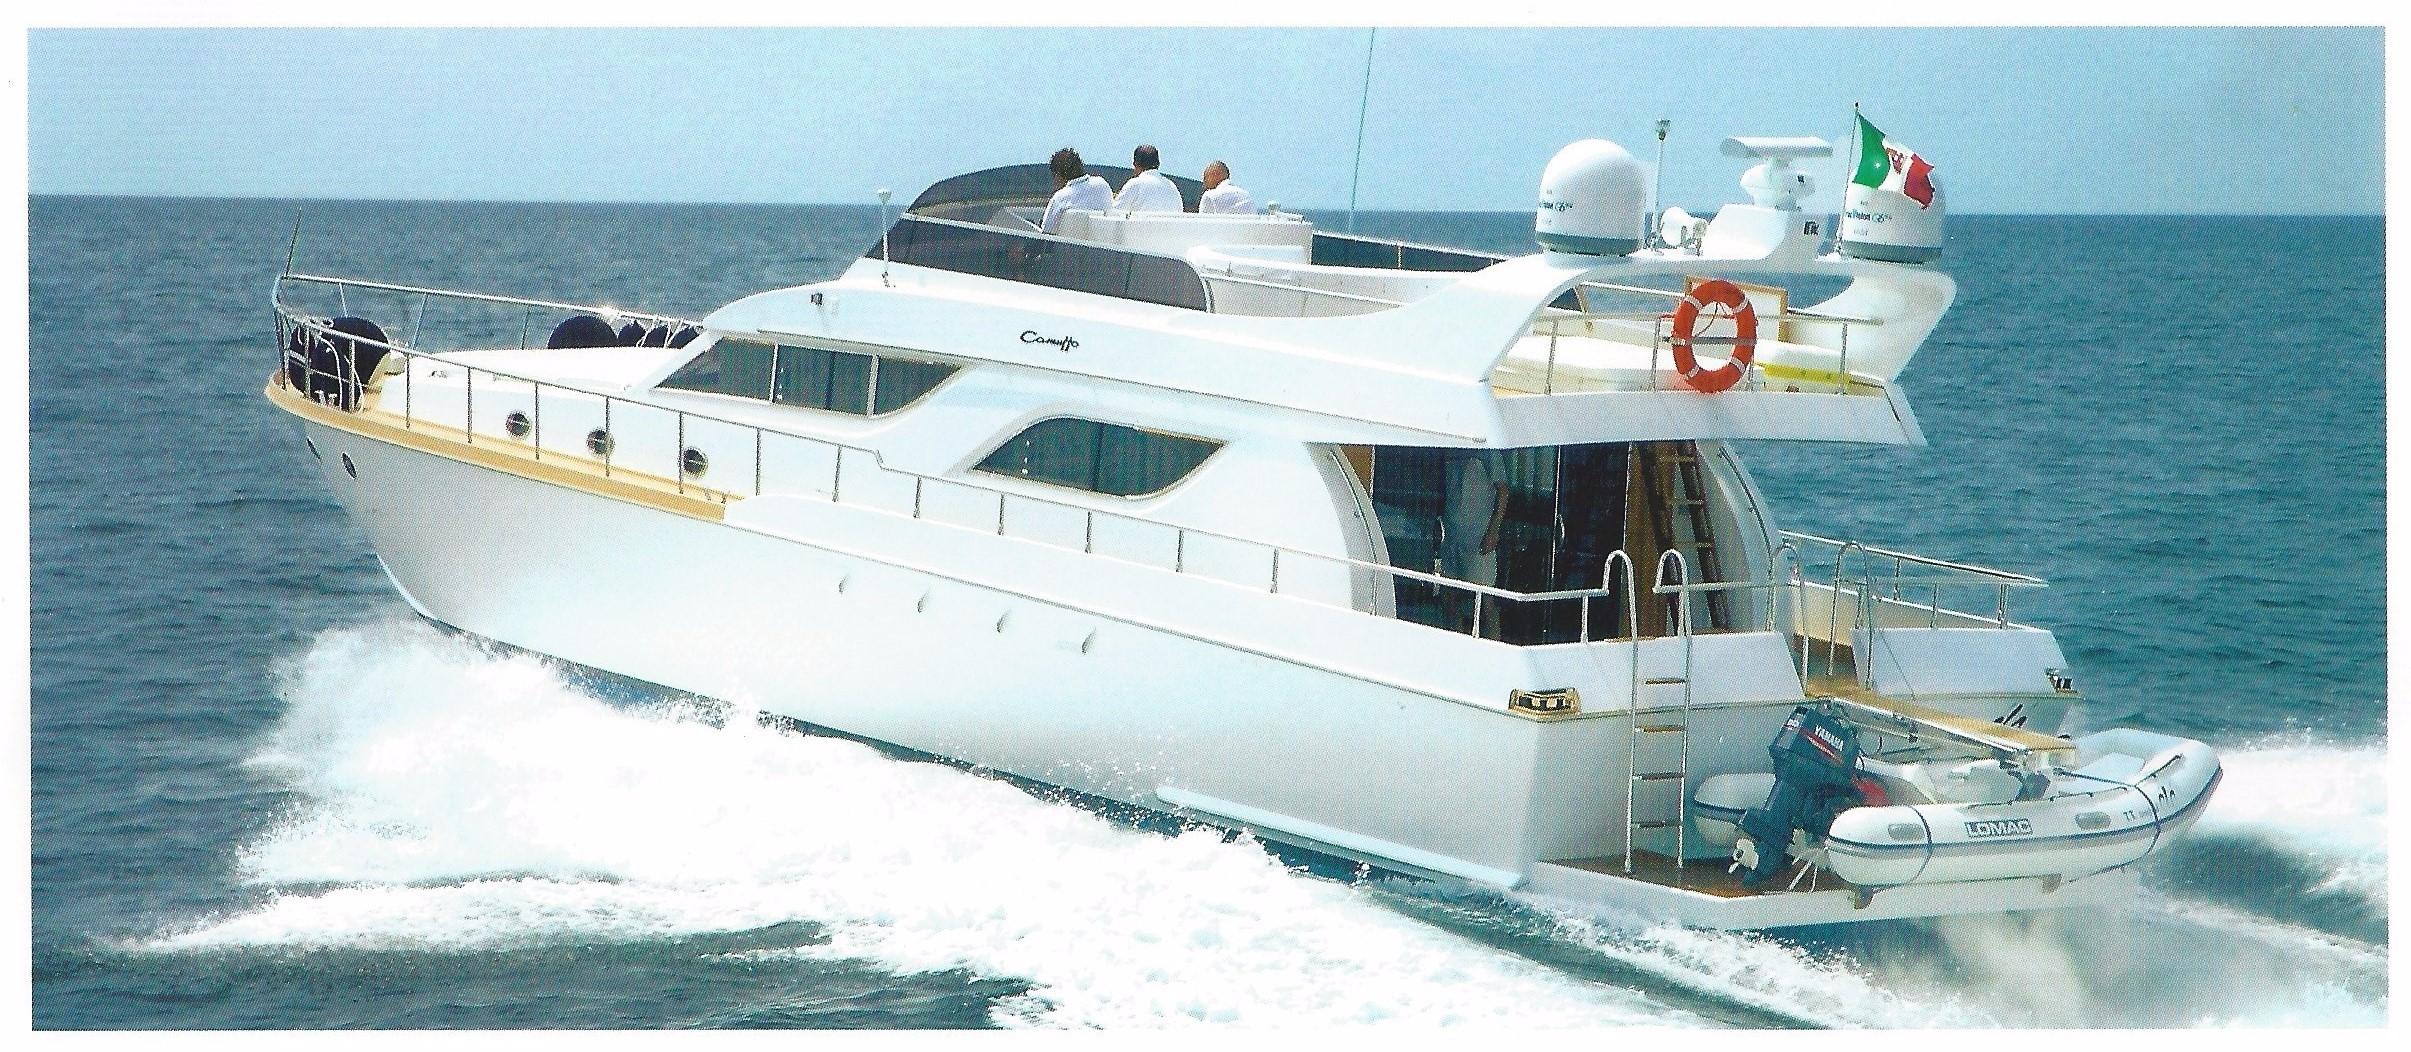 camuffo yachts